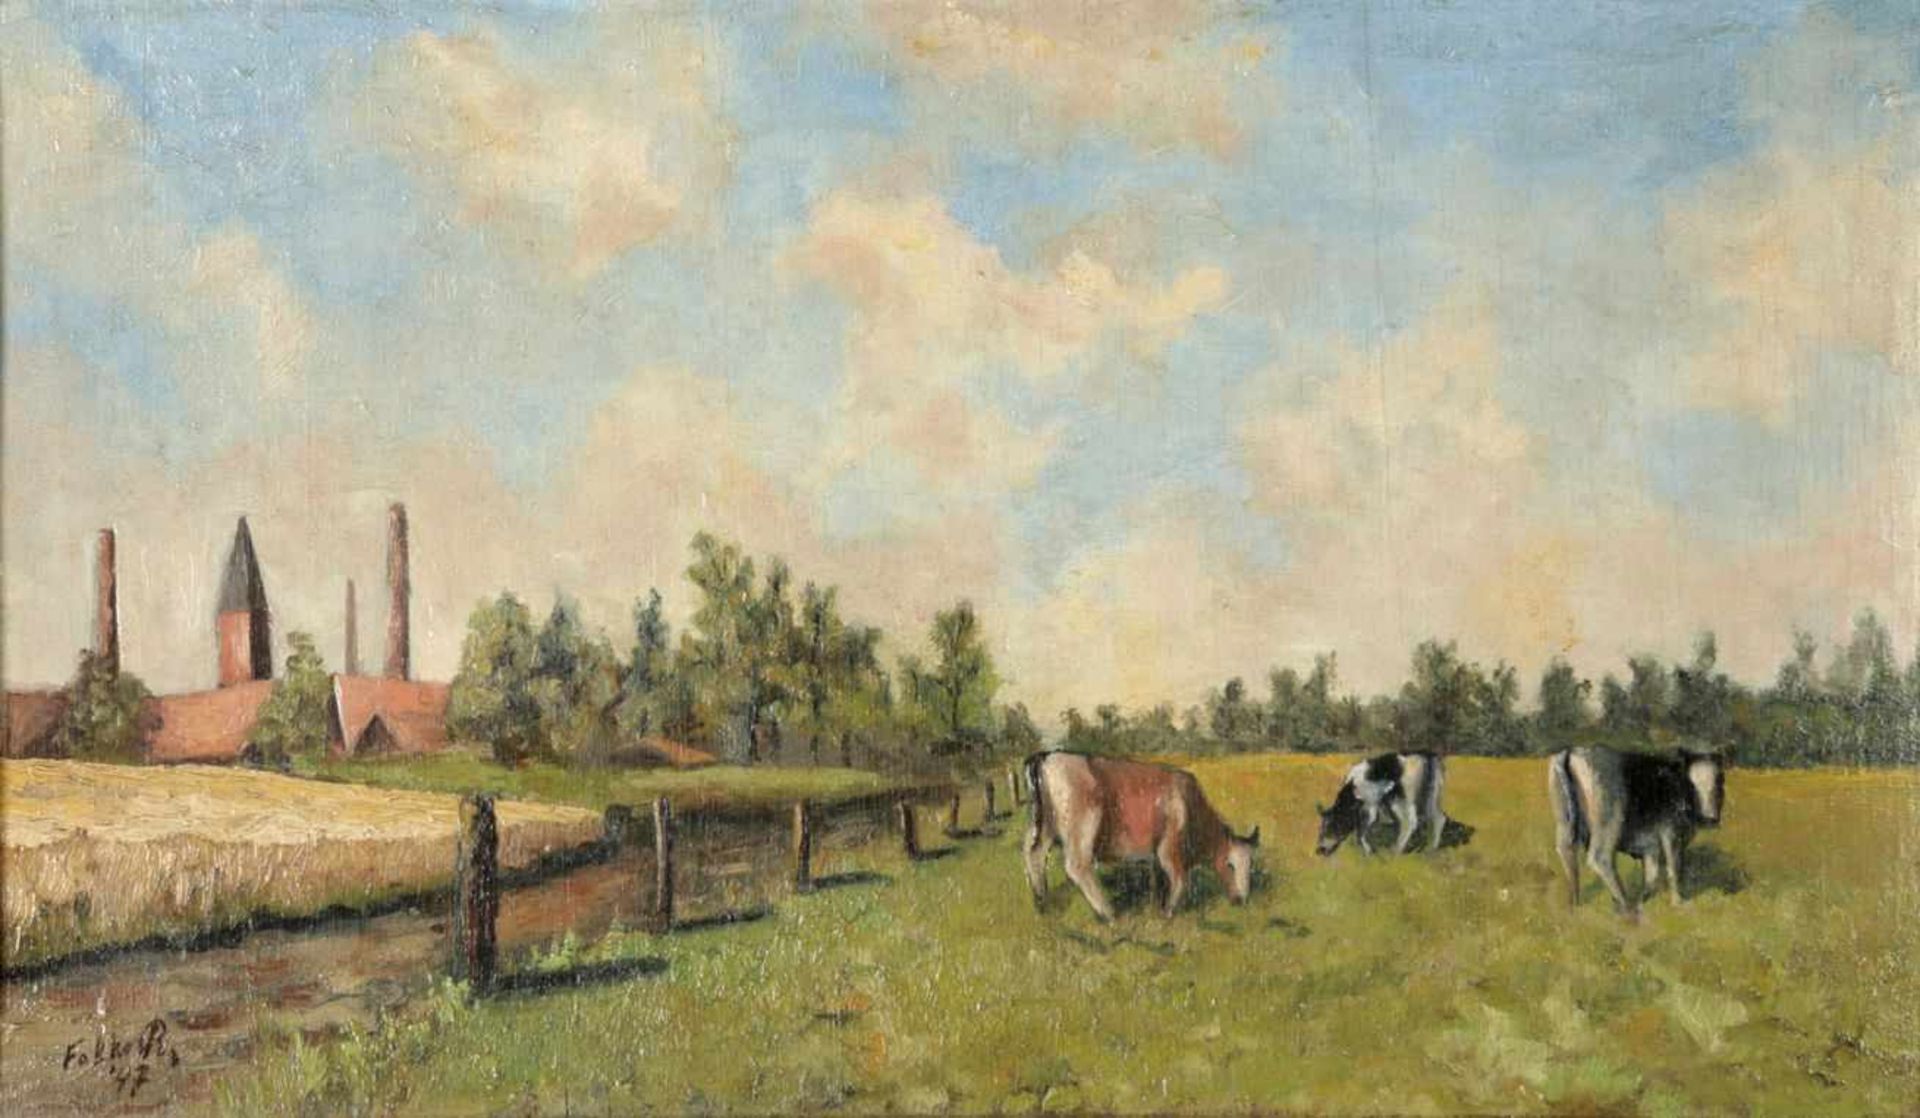 Kühe auf der WeideDeutschland, 1947 Öl a. Holz, u.li. sign./dat. "Falko R. (19)47". Nachgedunkelt,